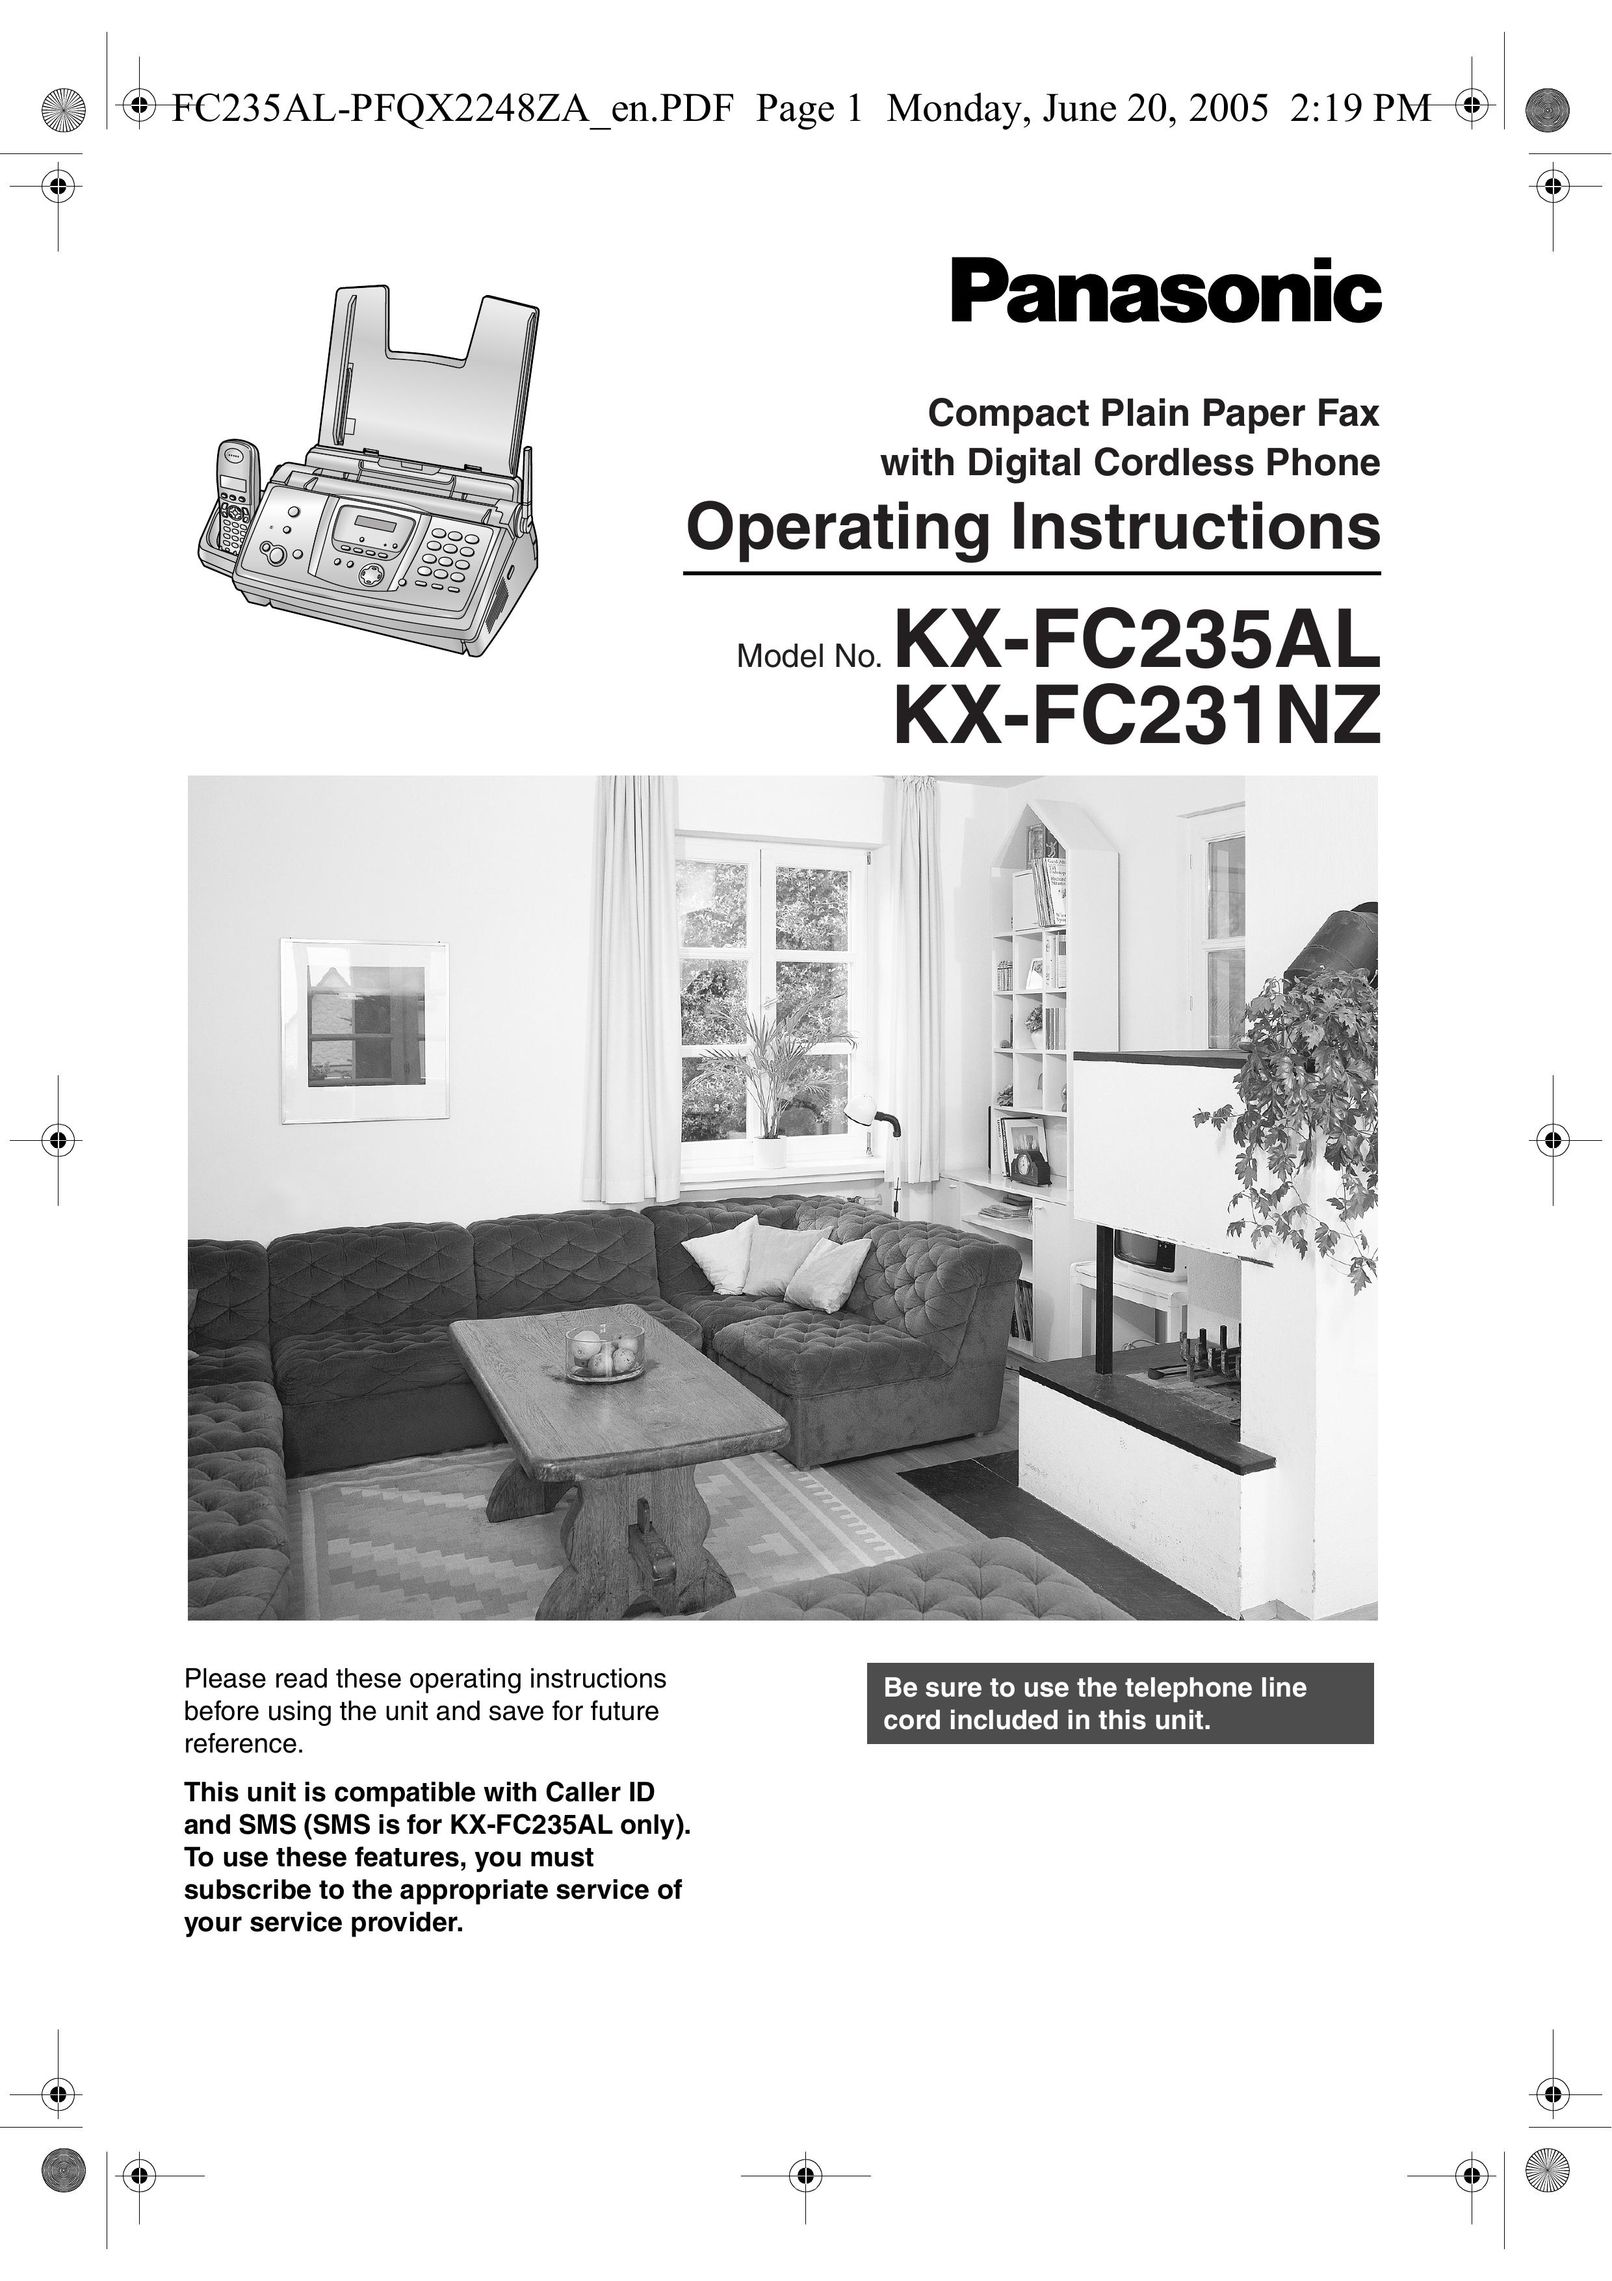 Panasonic KX-FC235AL Fax Machine User Manual